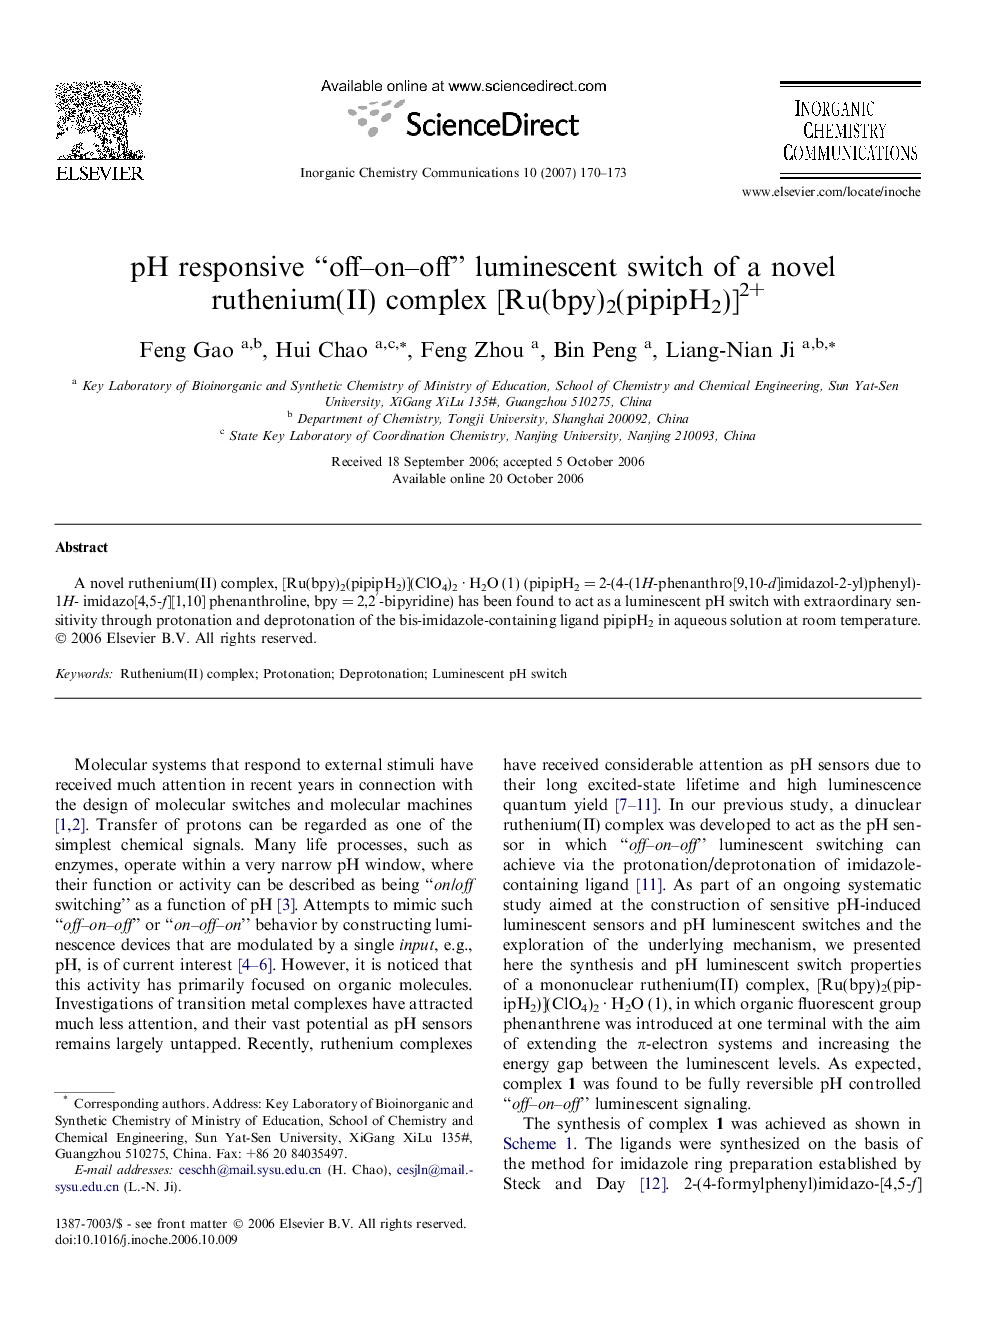 pH responsive “off-on-off” luminescent switch of a novel ruthenium(II) complex [Ru(bpy)2(pipipH2)]2+